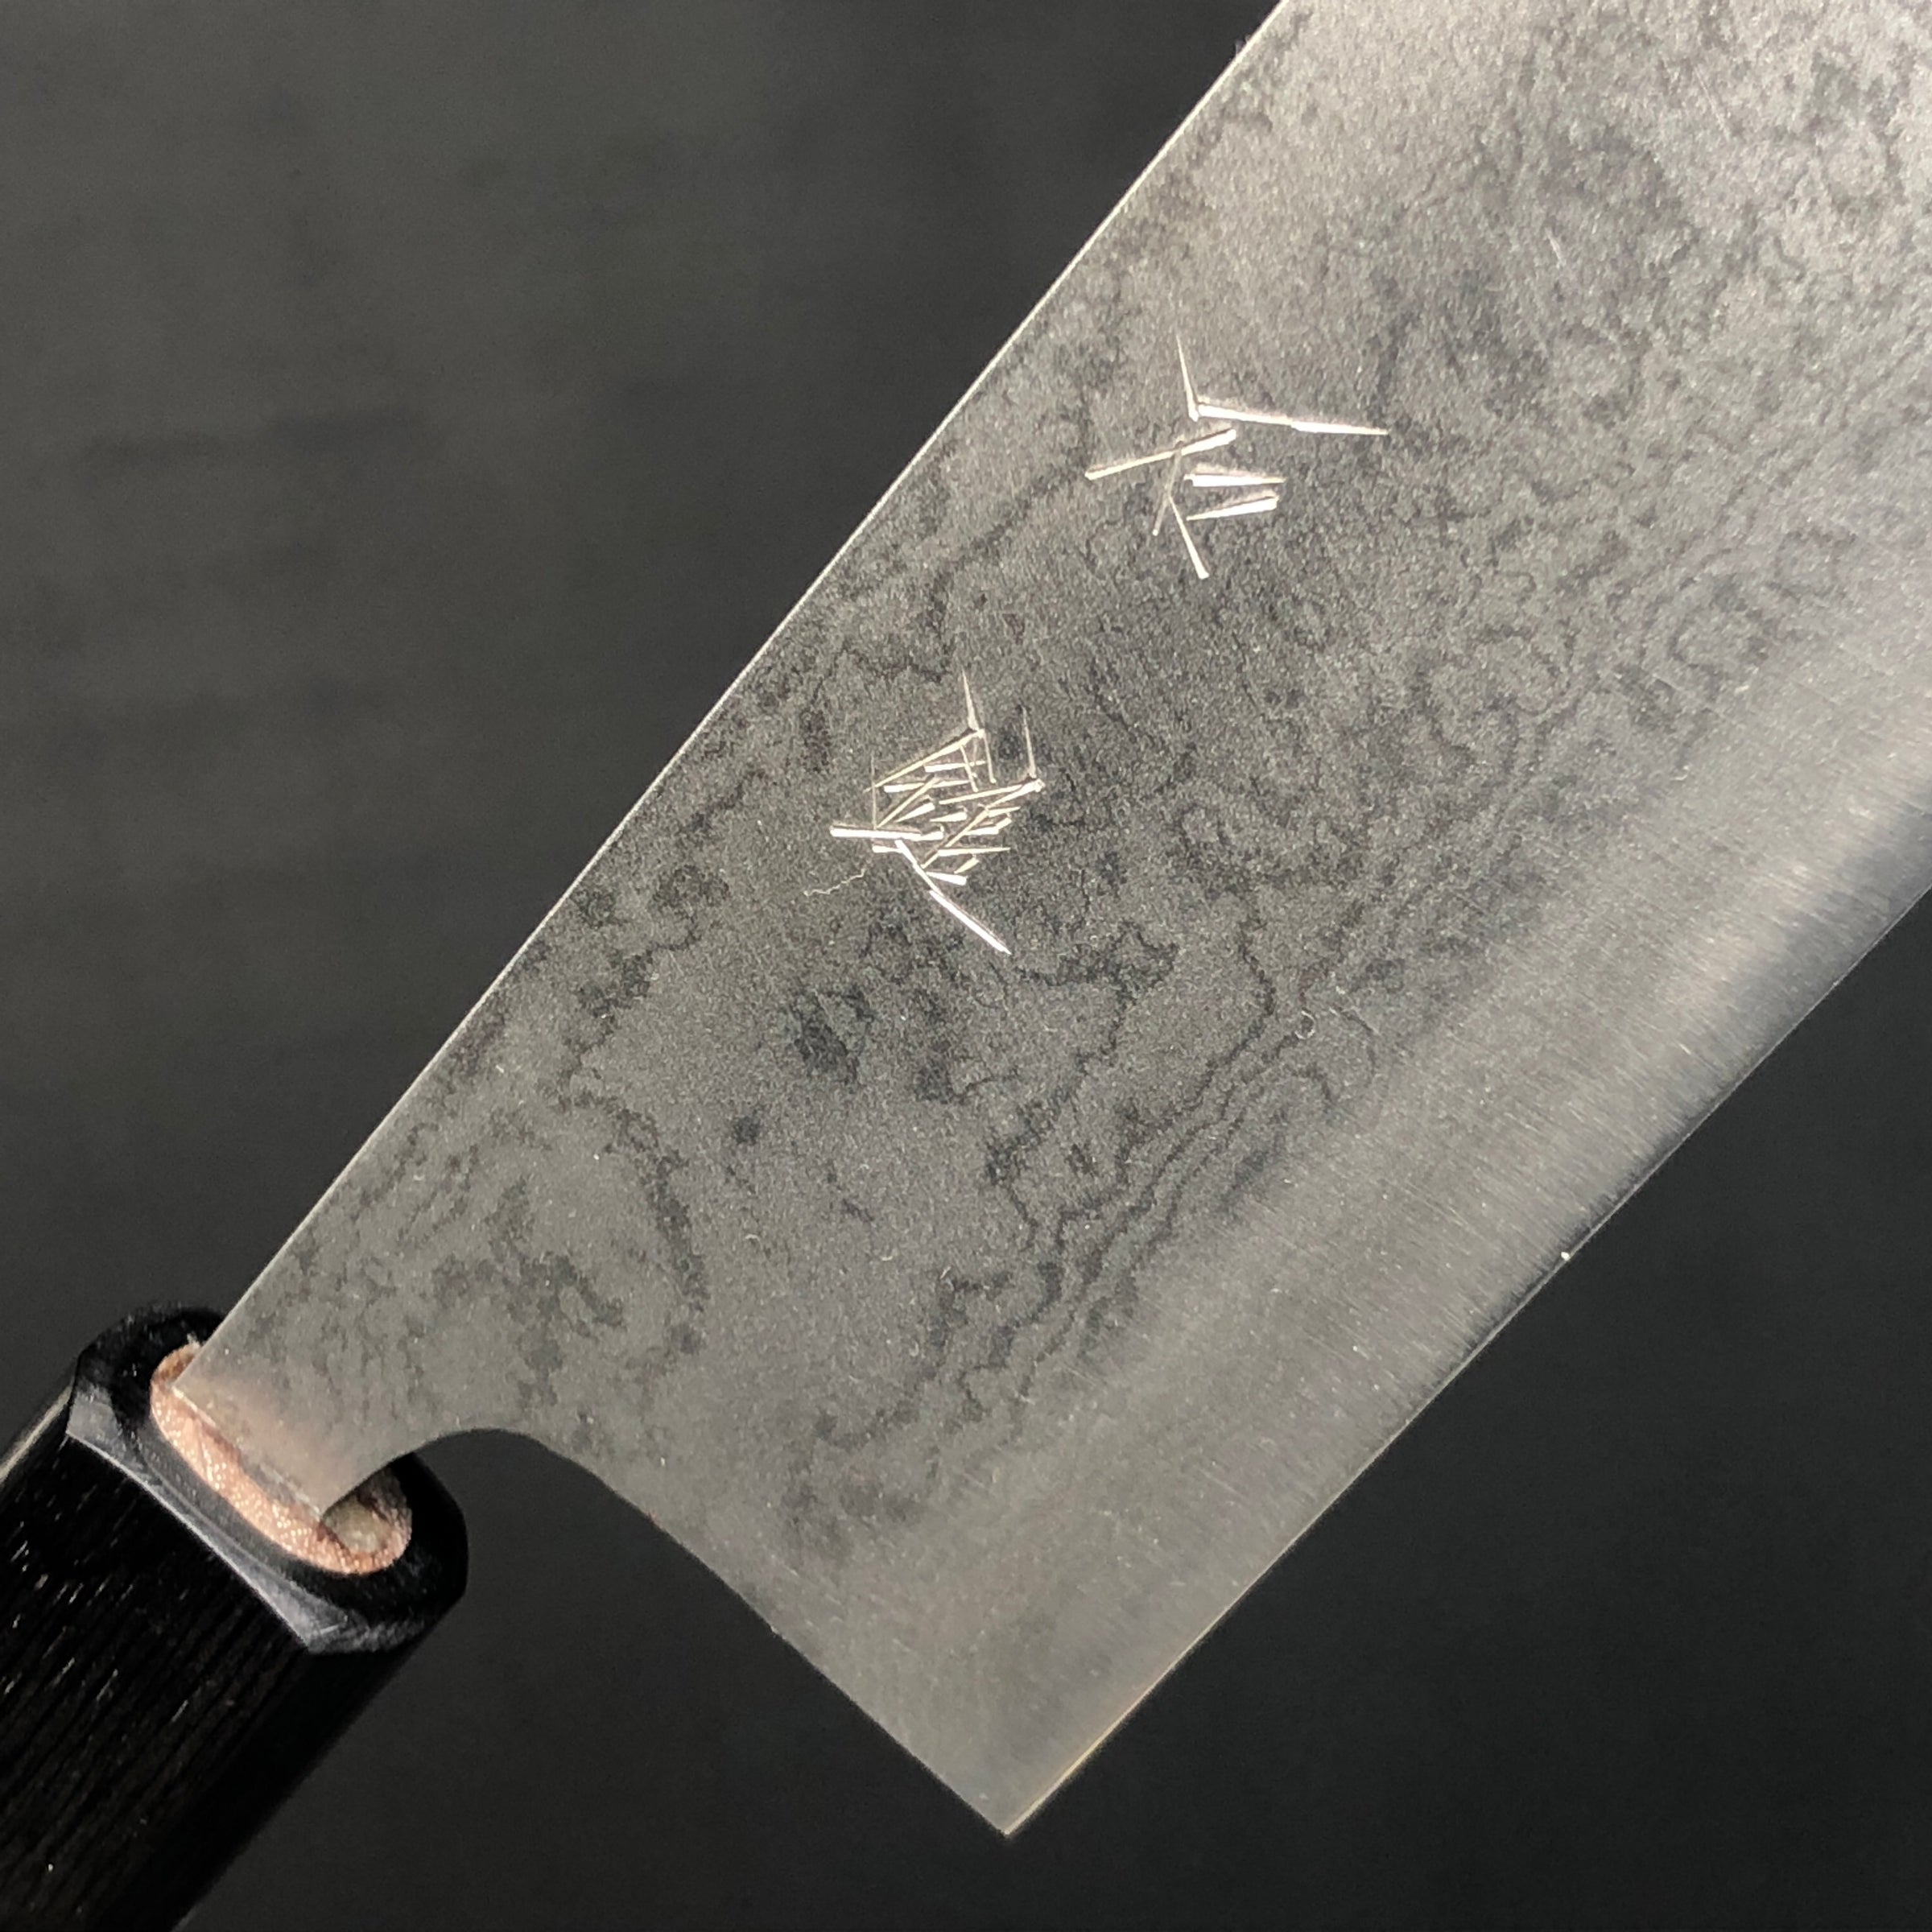 Yuri Kiritsuke – WASABI Knives